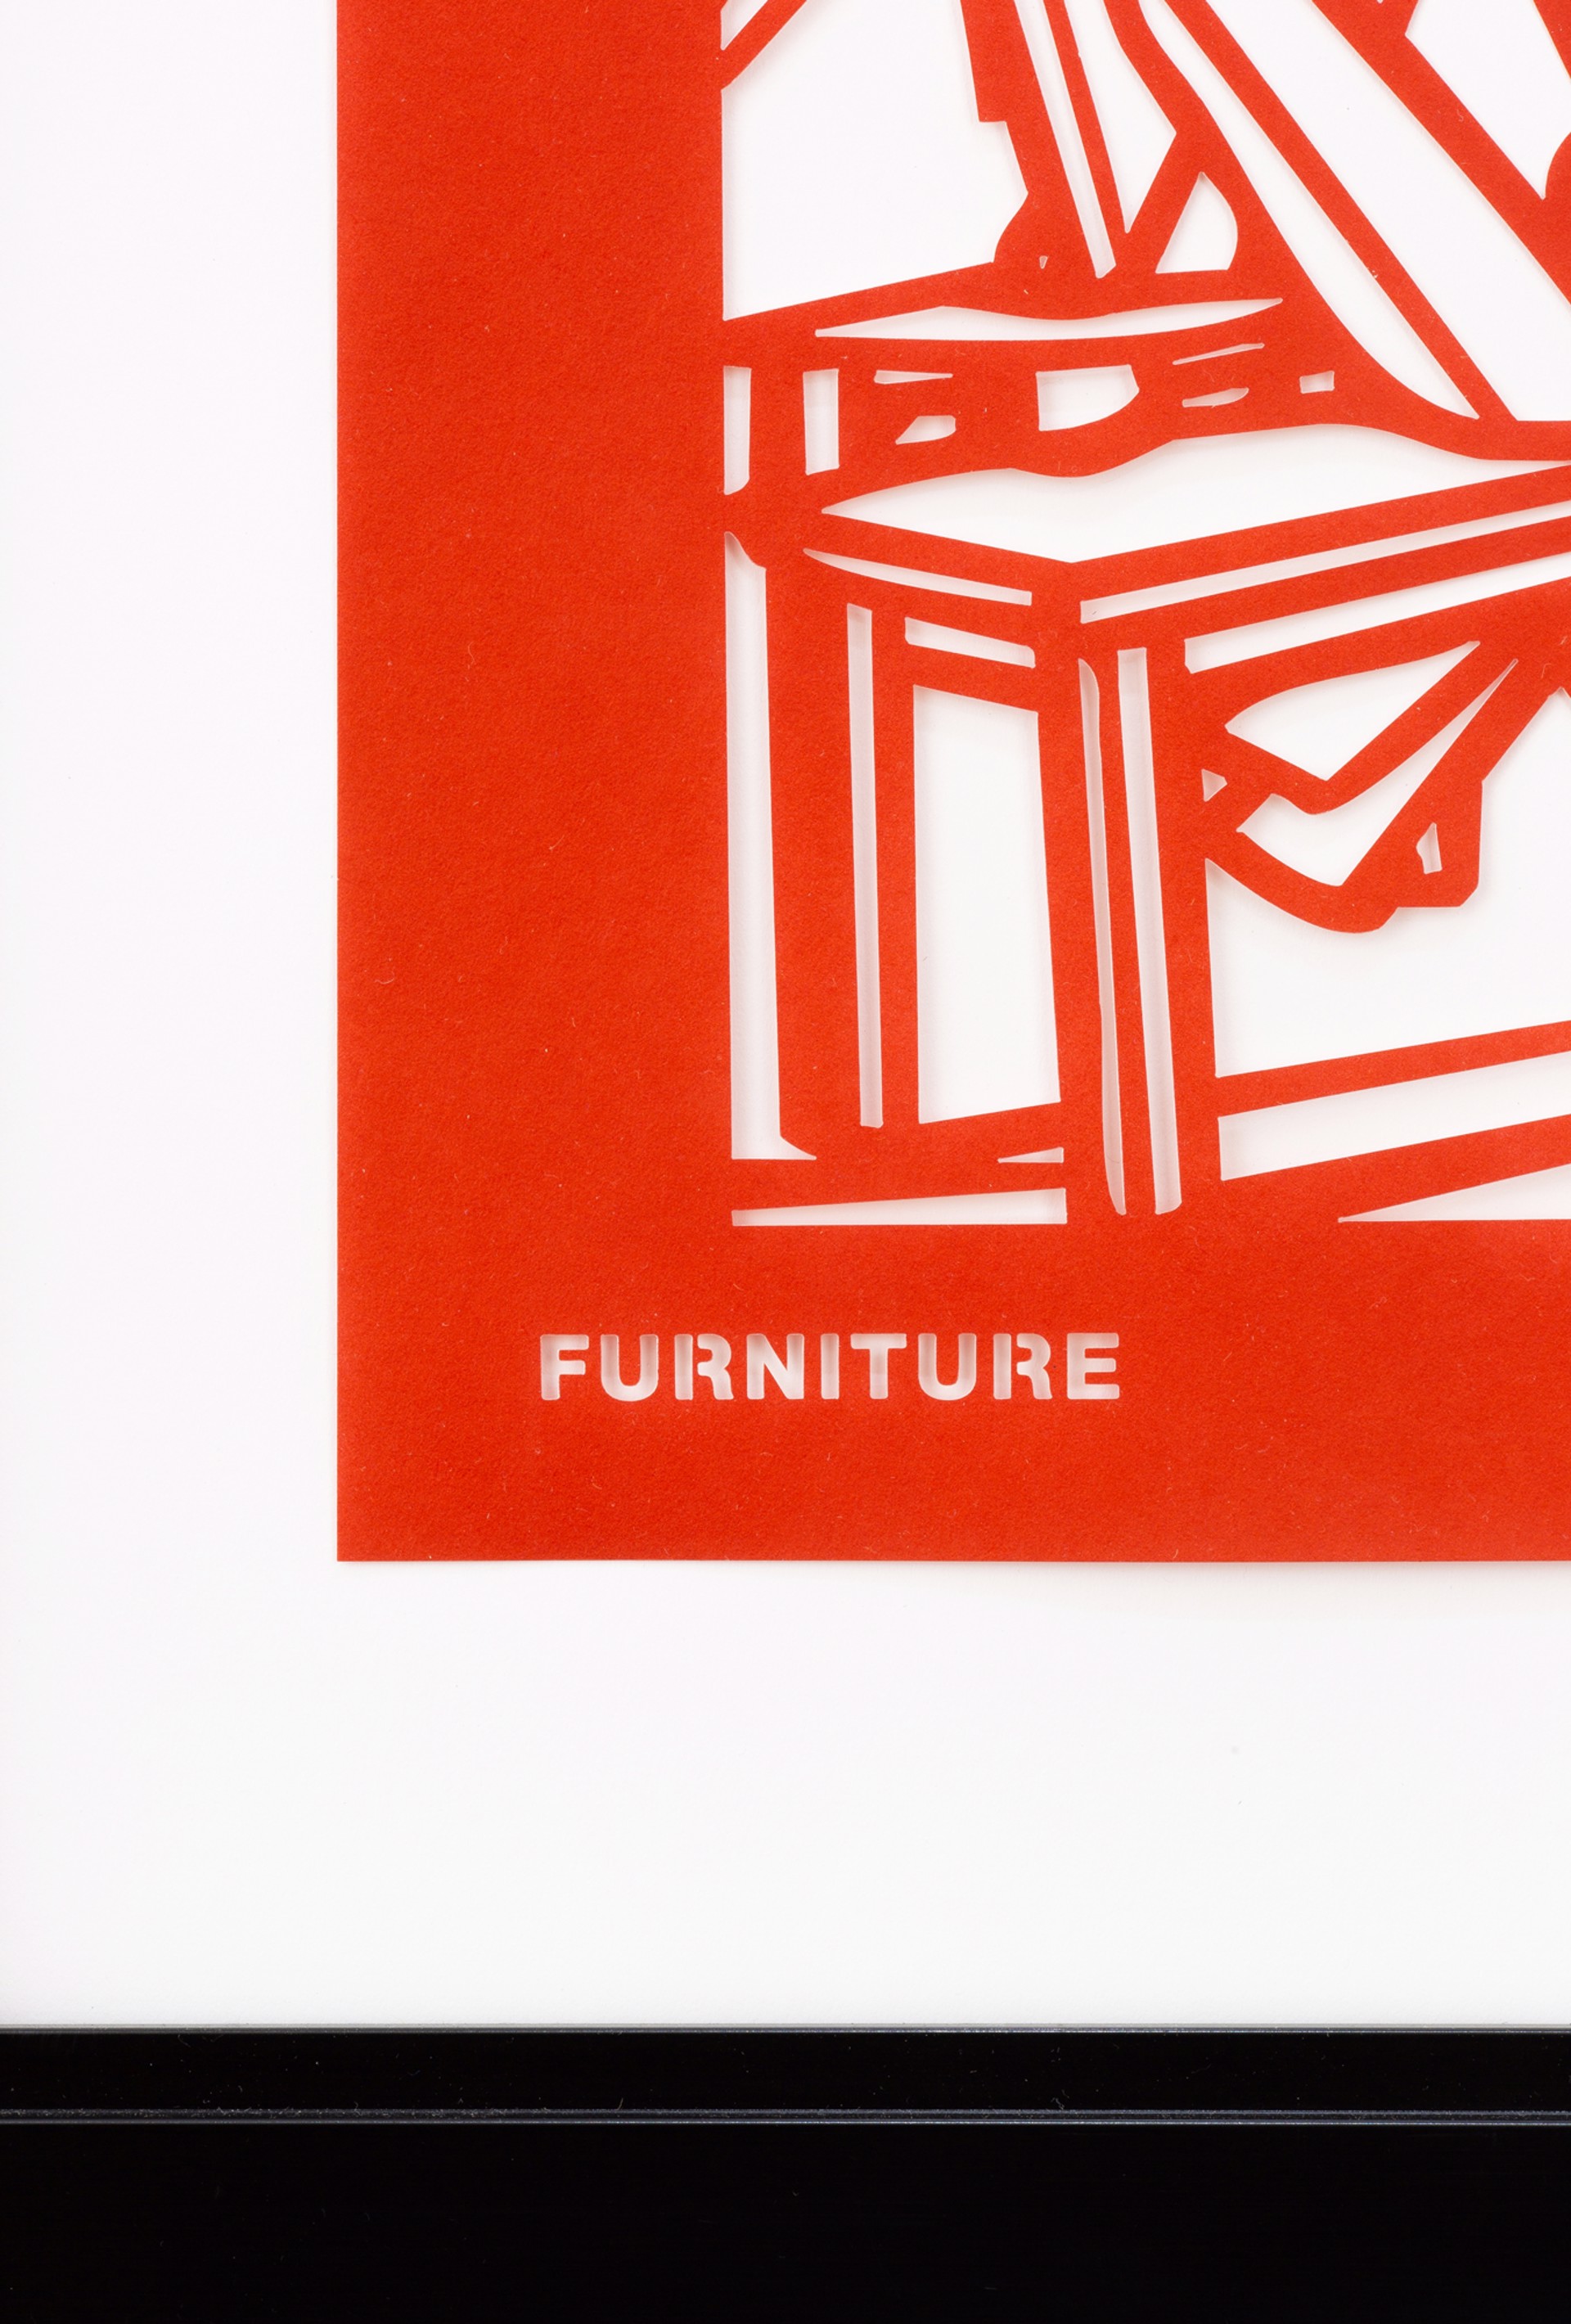 Furniture (from Papercut Portfolio) by Ai Weiwei